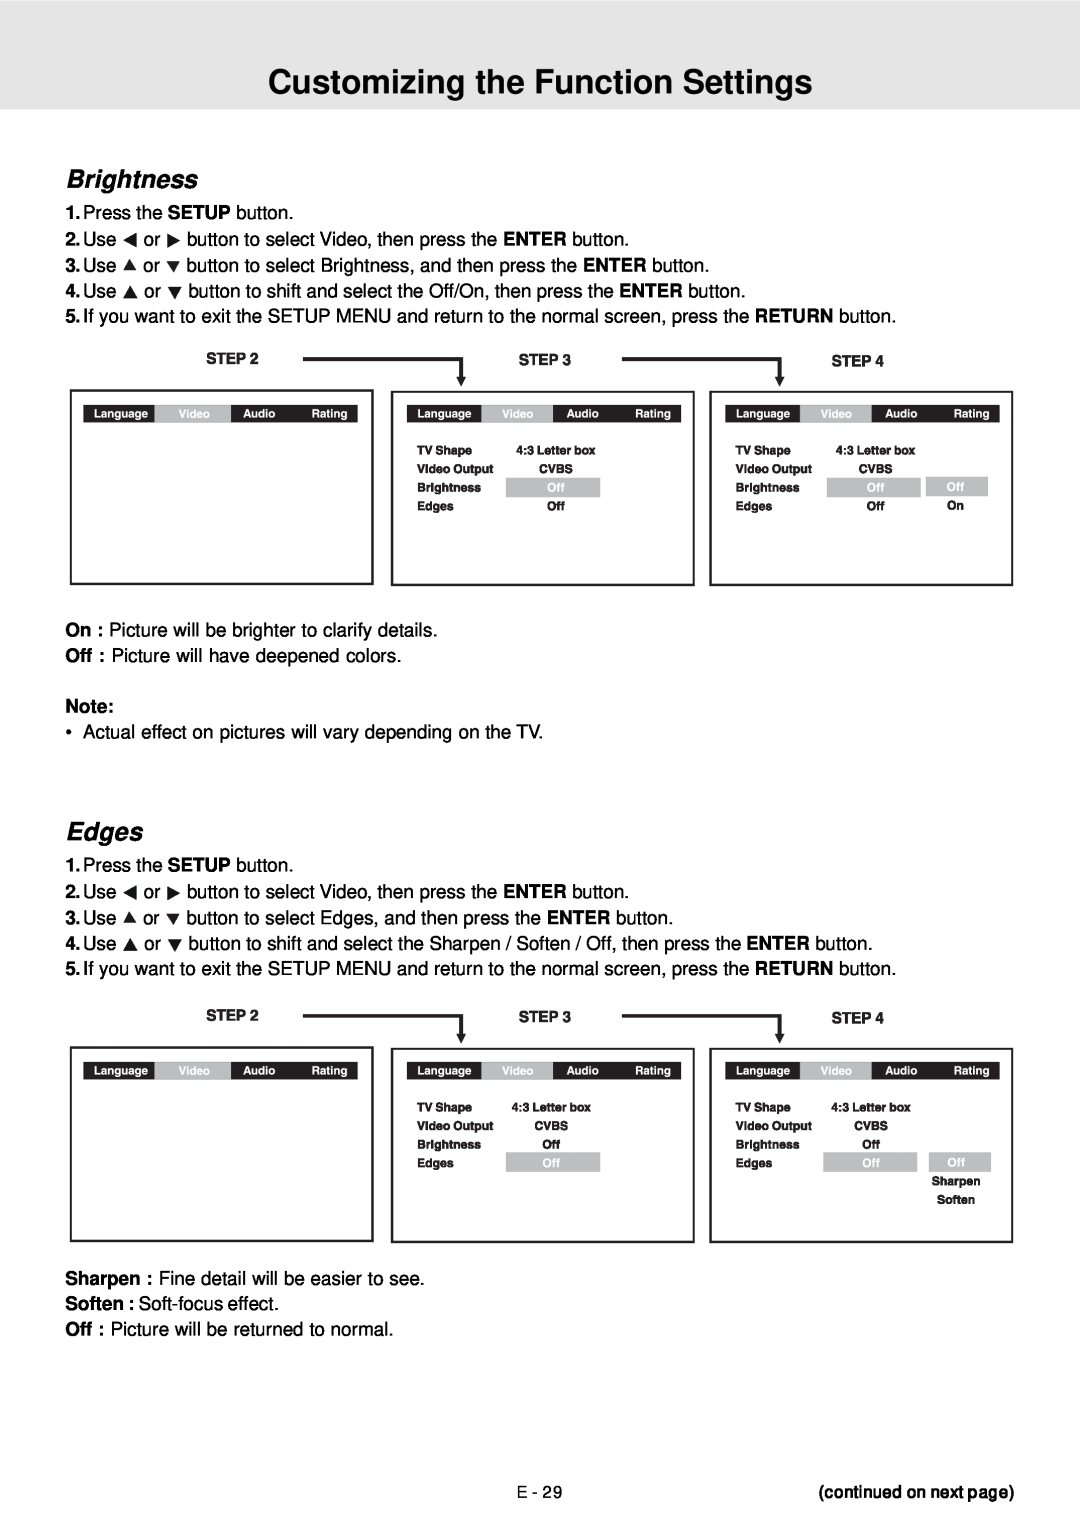 Venturer STS91 manual Brightness, Edges, Customizing the Function Settings 